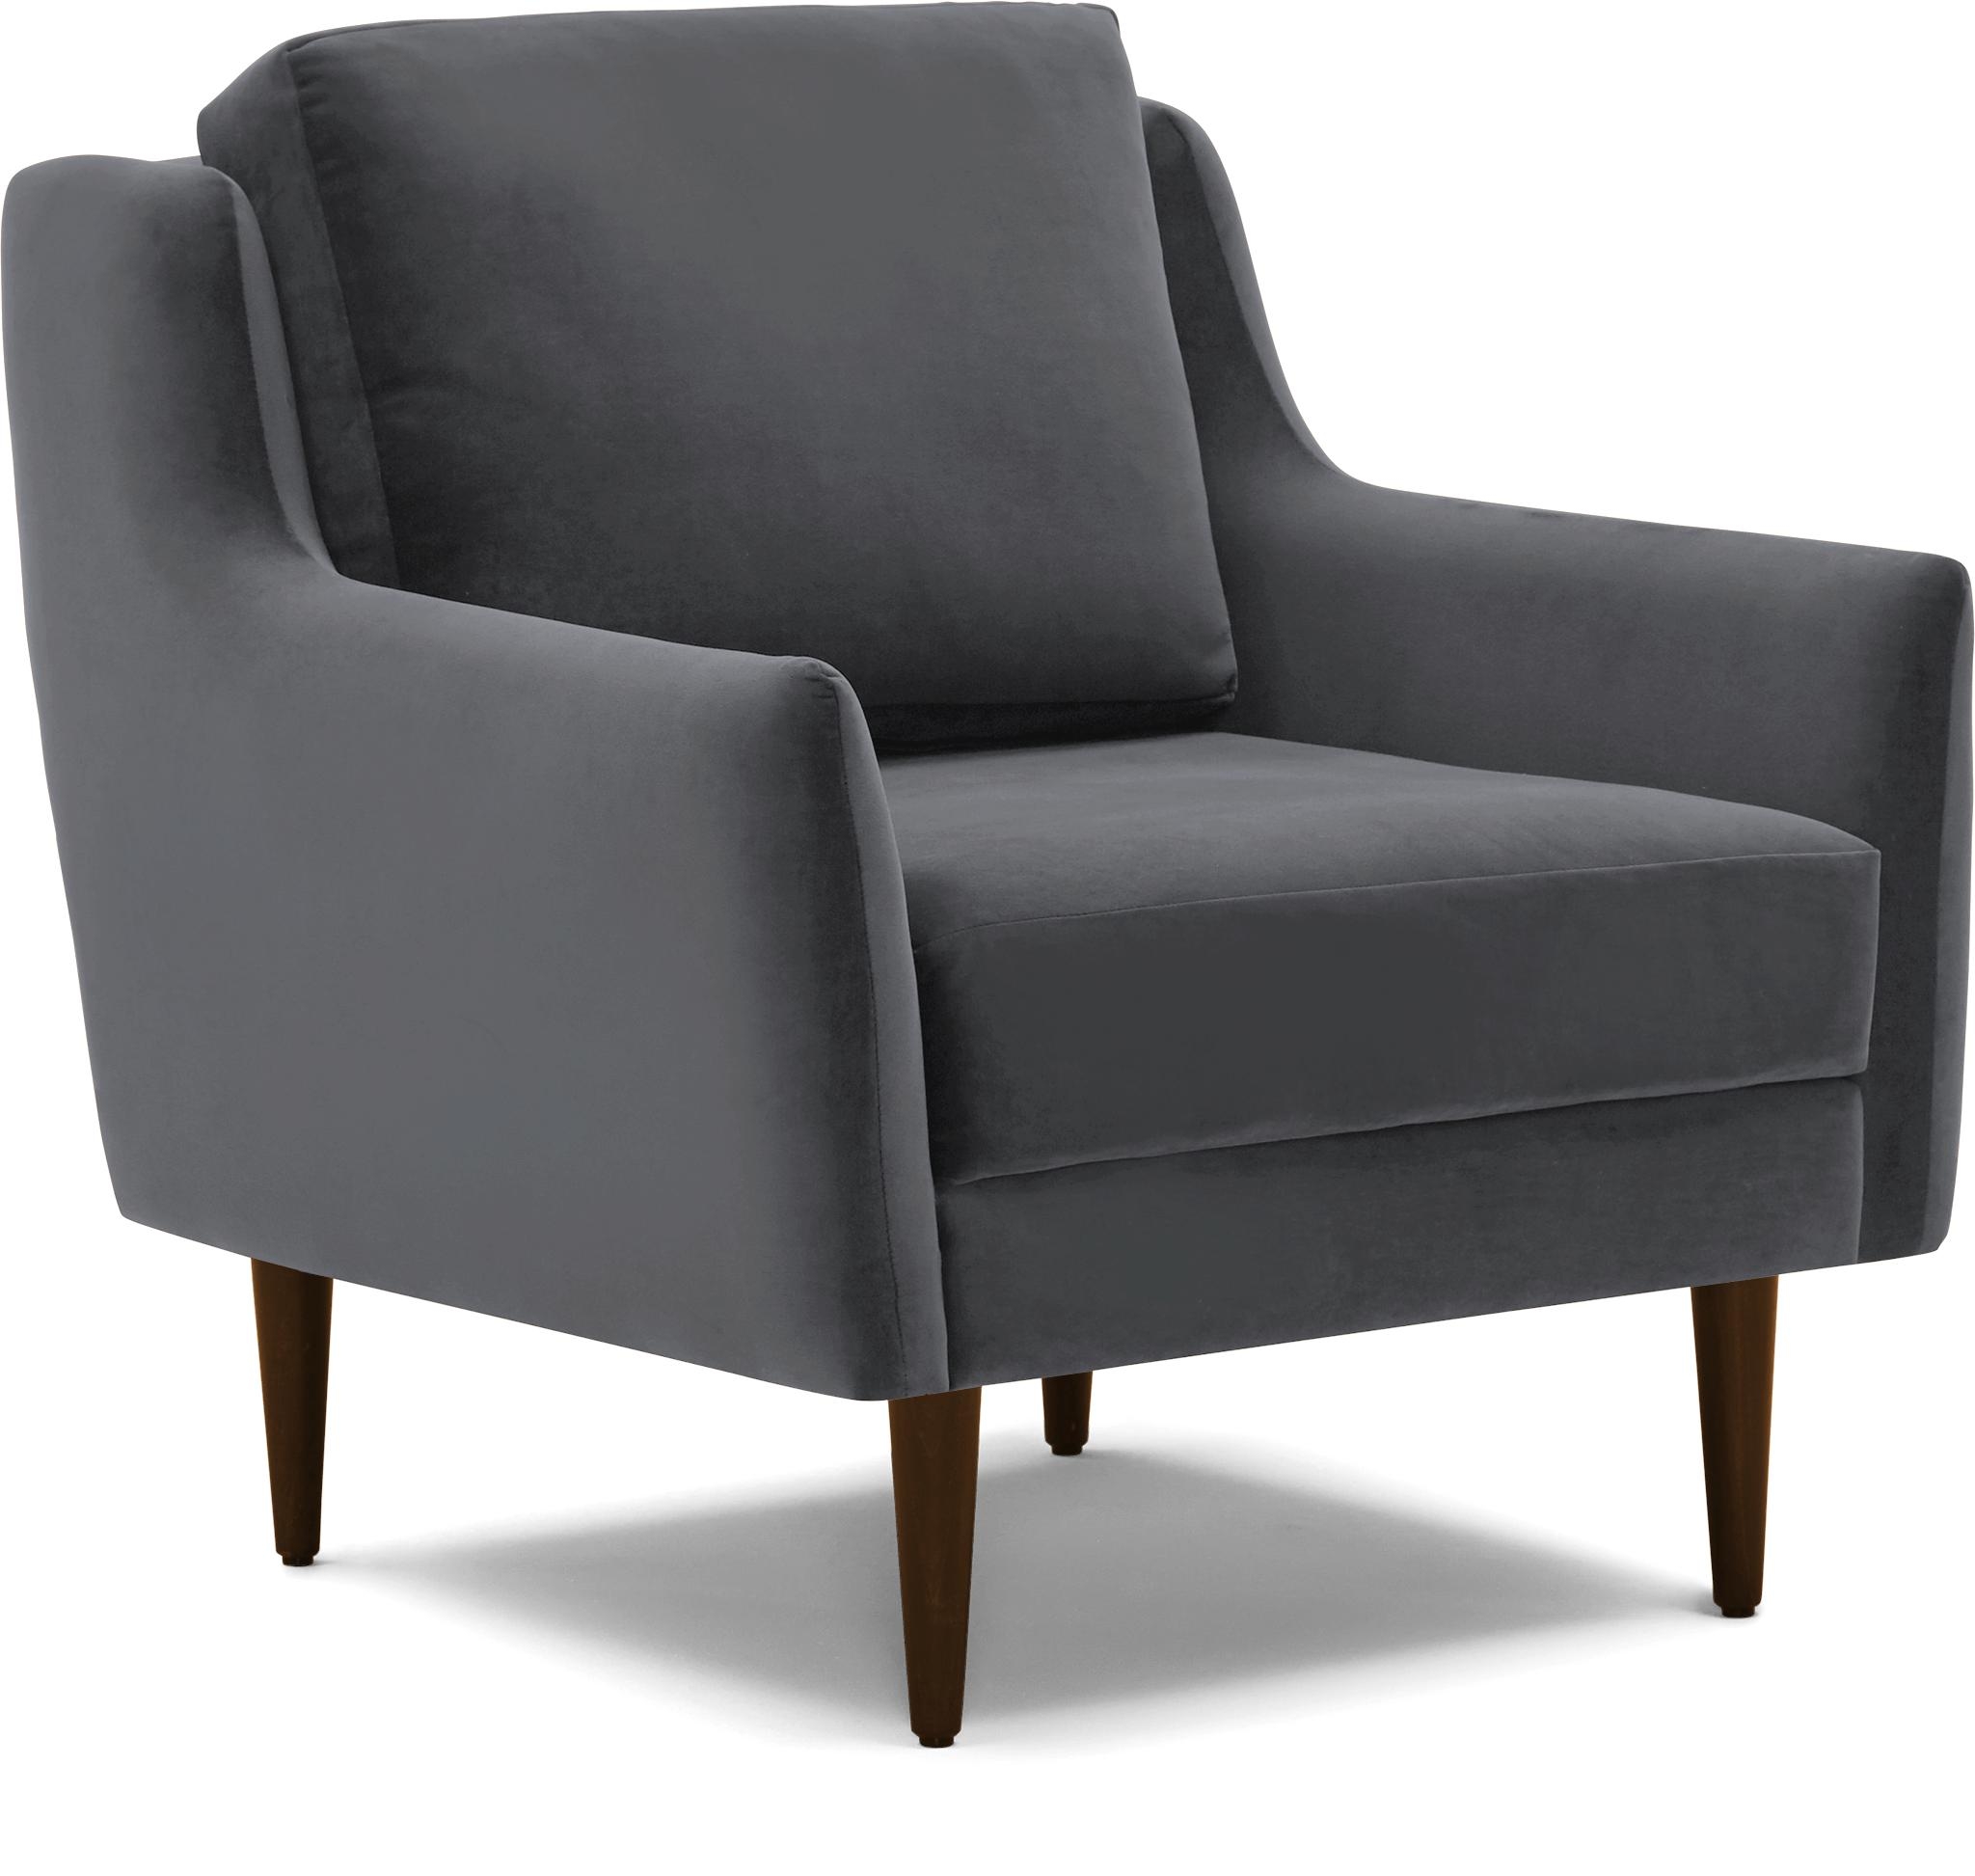 Gray Bell Mid Century Modern Chair - Essence Ash - Mocha - Image 1